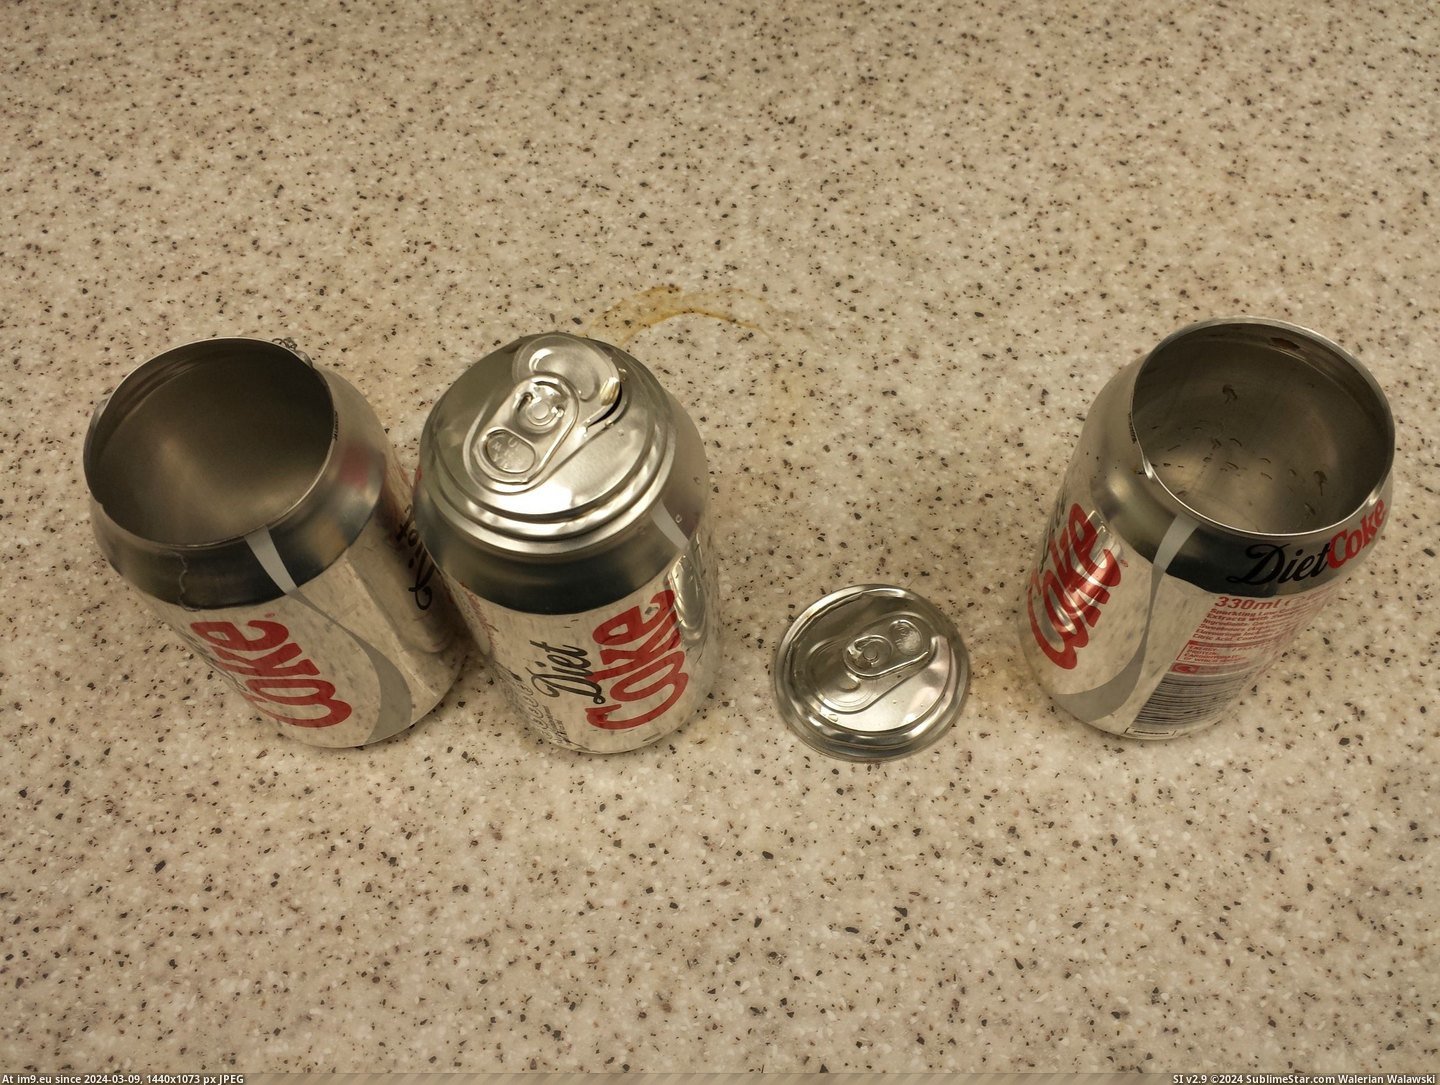 #Work #Way #Burst #Cans #Fridge [Mildlyinteresting] The cans in the fridge at work burst open in a way I've never seen 4 Pic. (Bild von album My r/MILDLYINTERESTING favs))